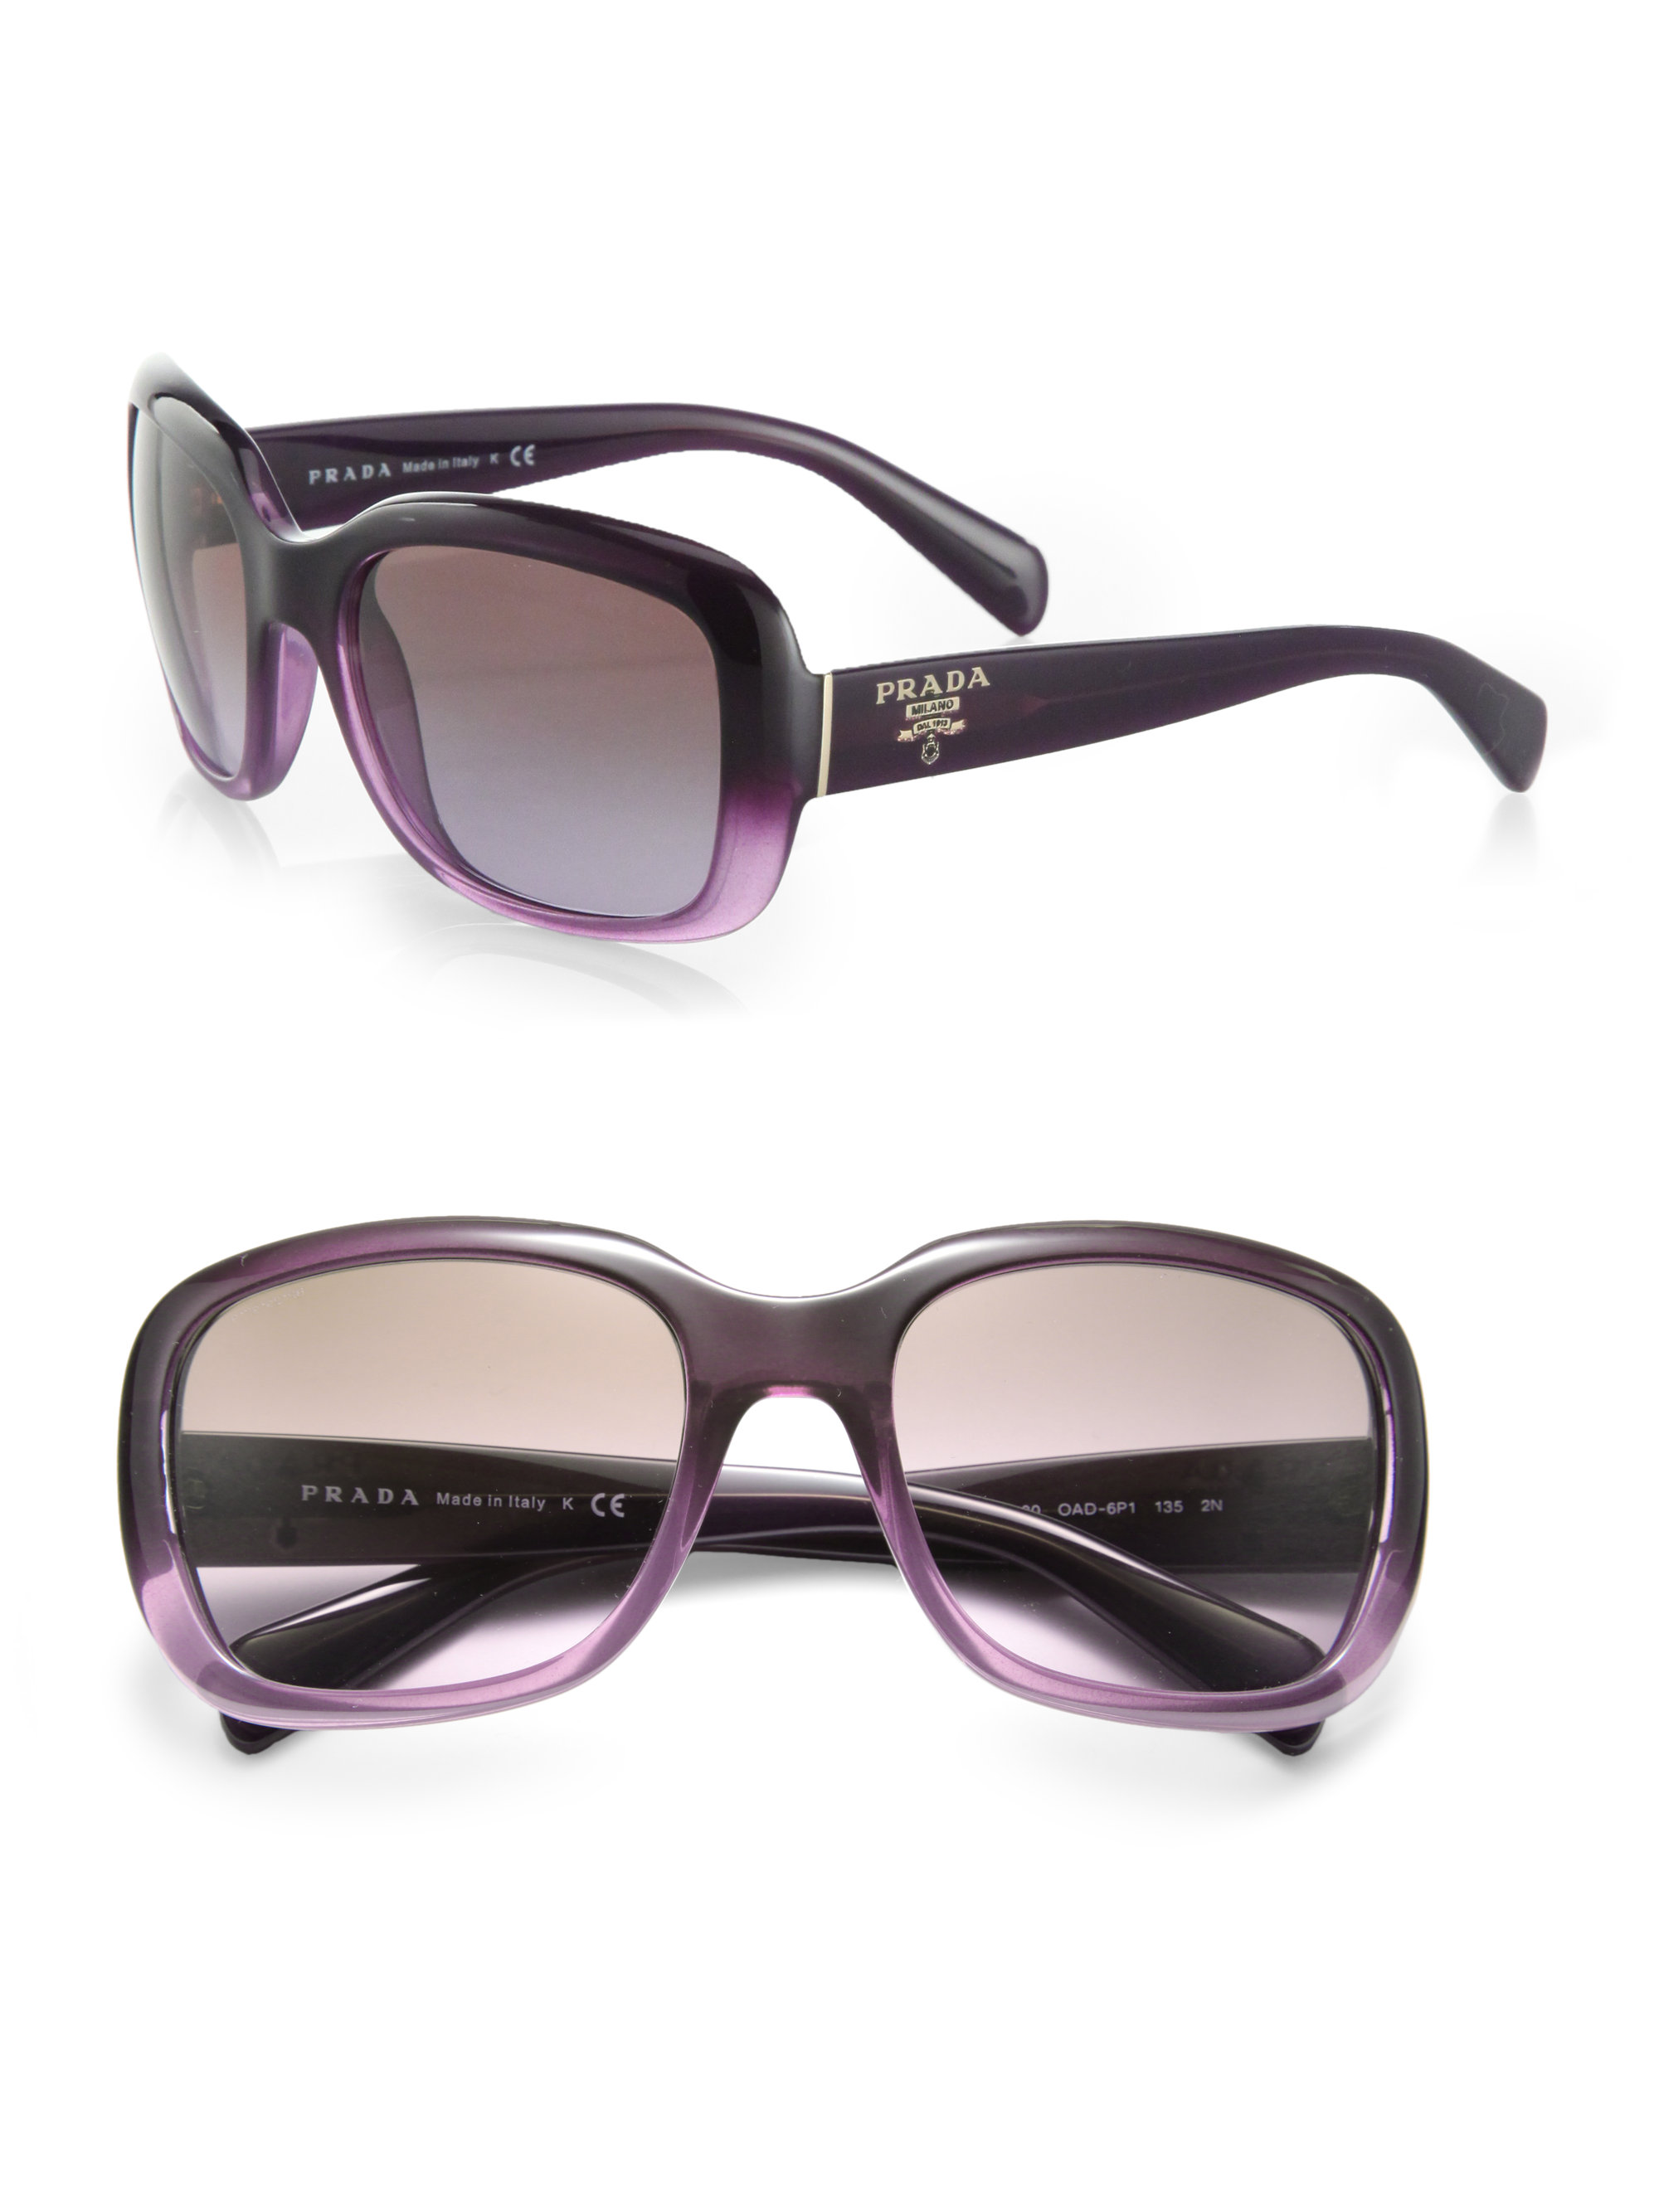 Lyst - Prada Oversized Square Glam Sunglasses in Purple